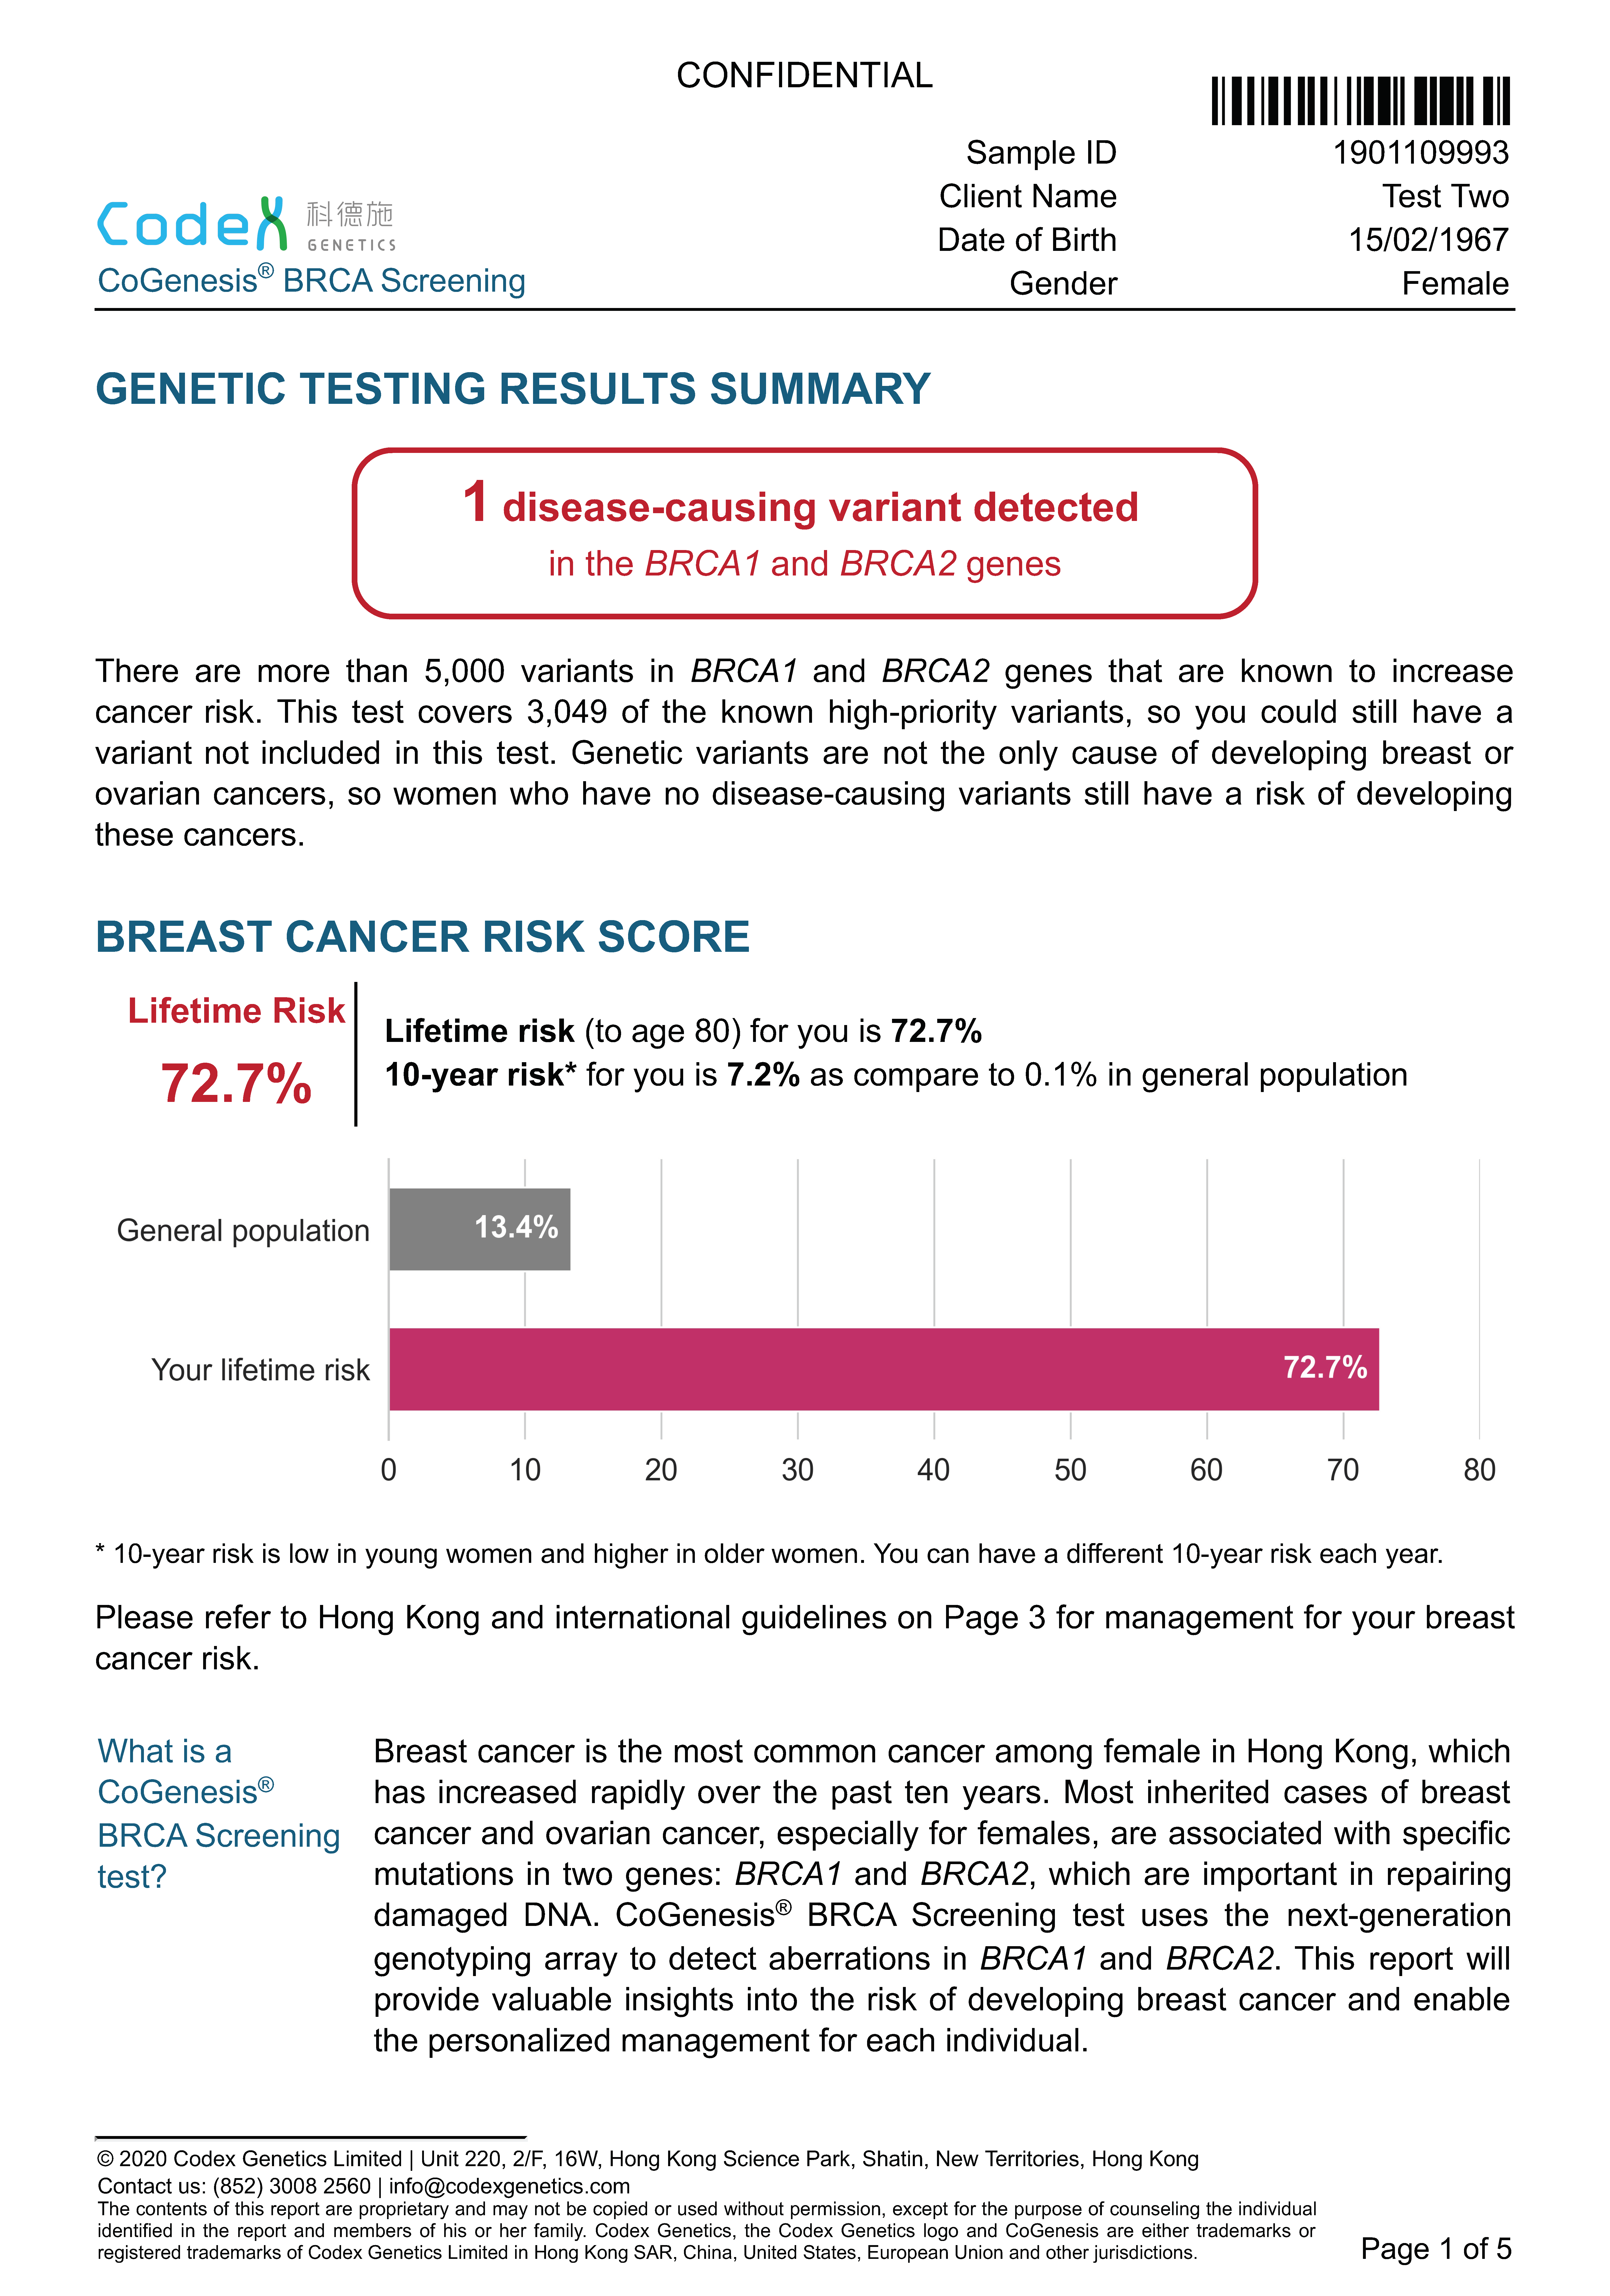 Codex CoGenesis®BRCA genetic test sample report